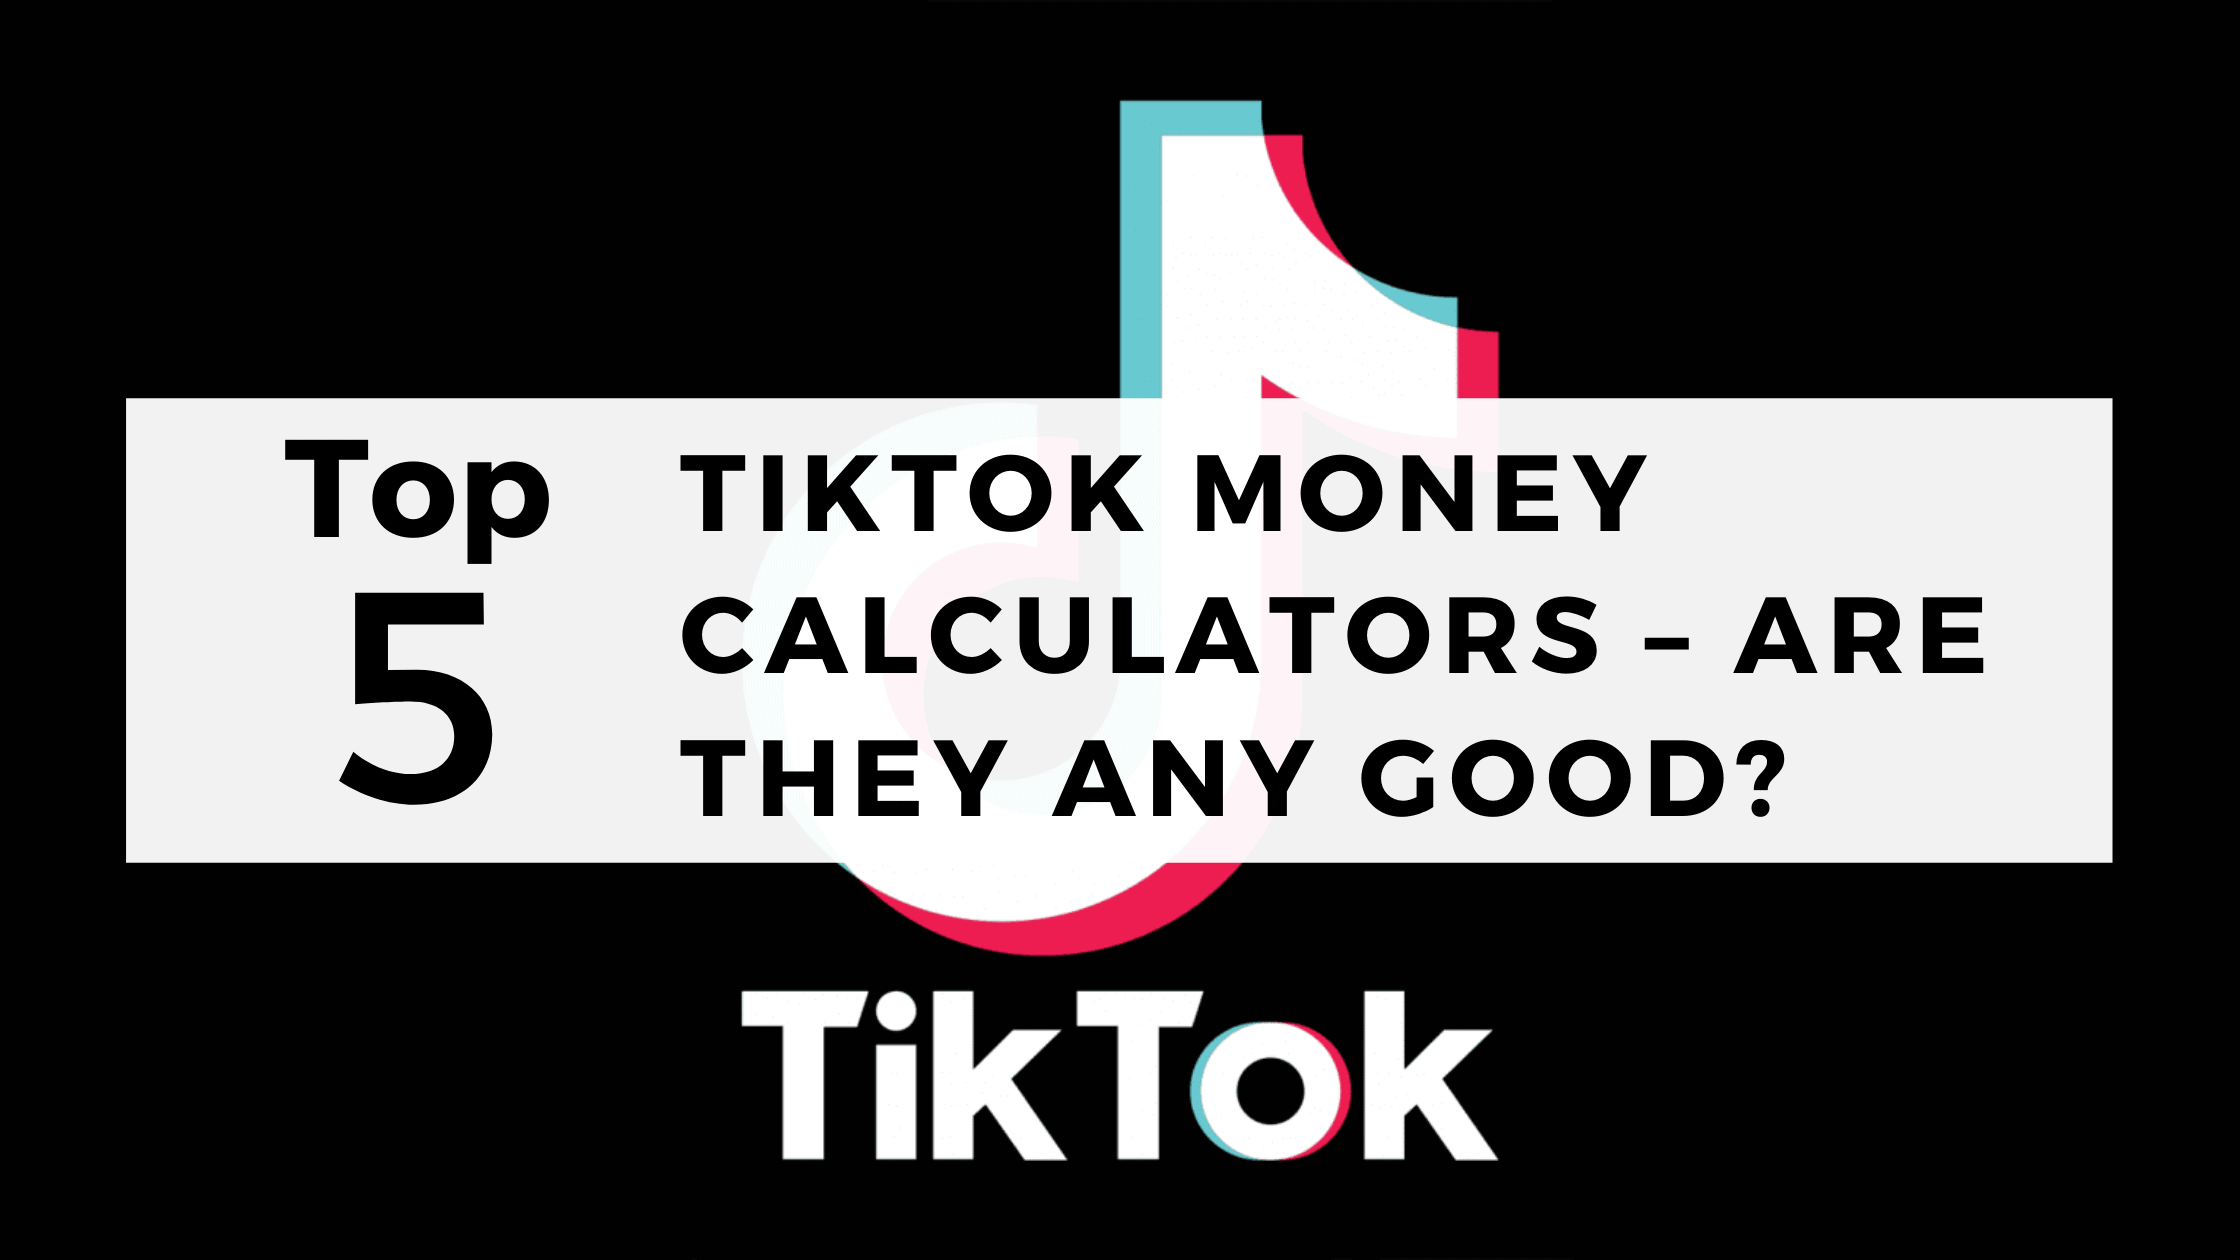 TikTok Money Calculators Compared